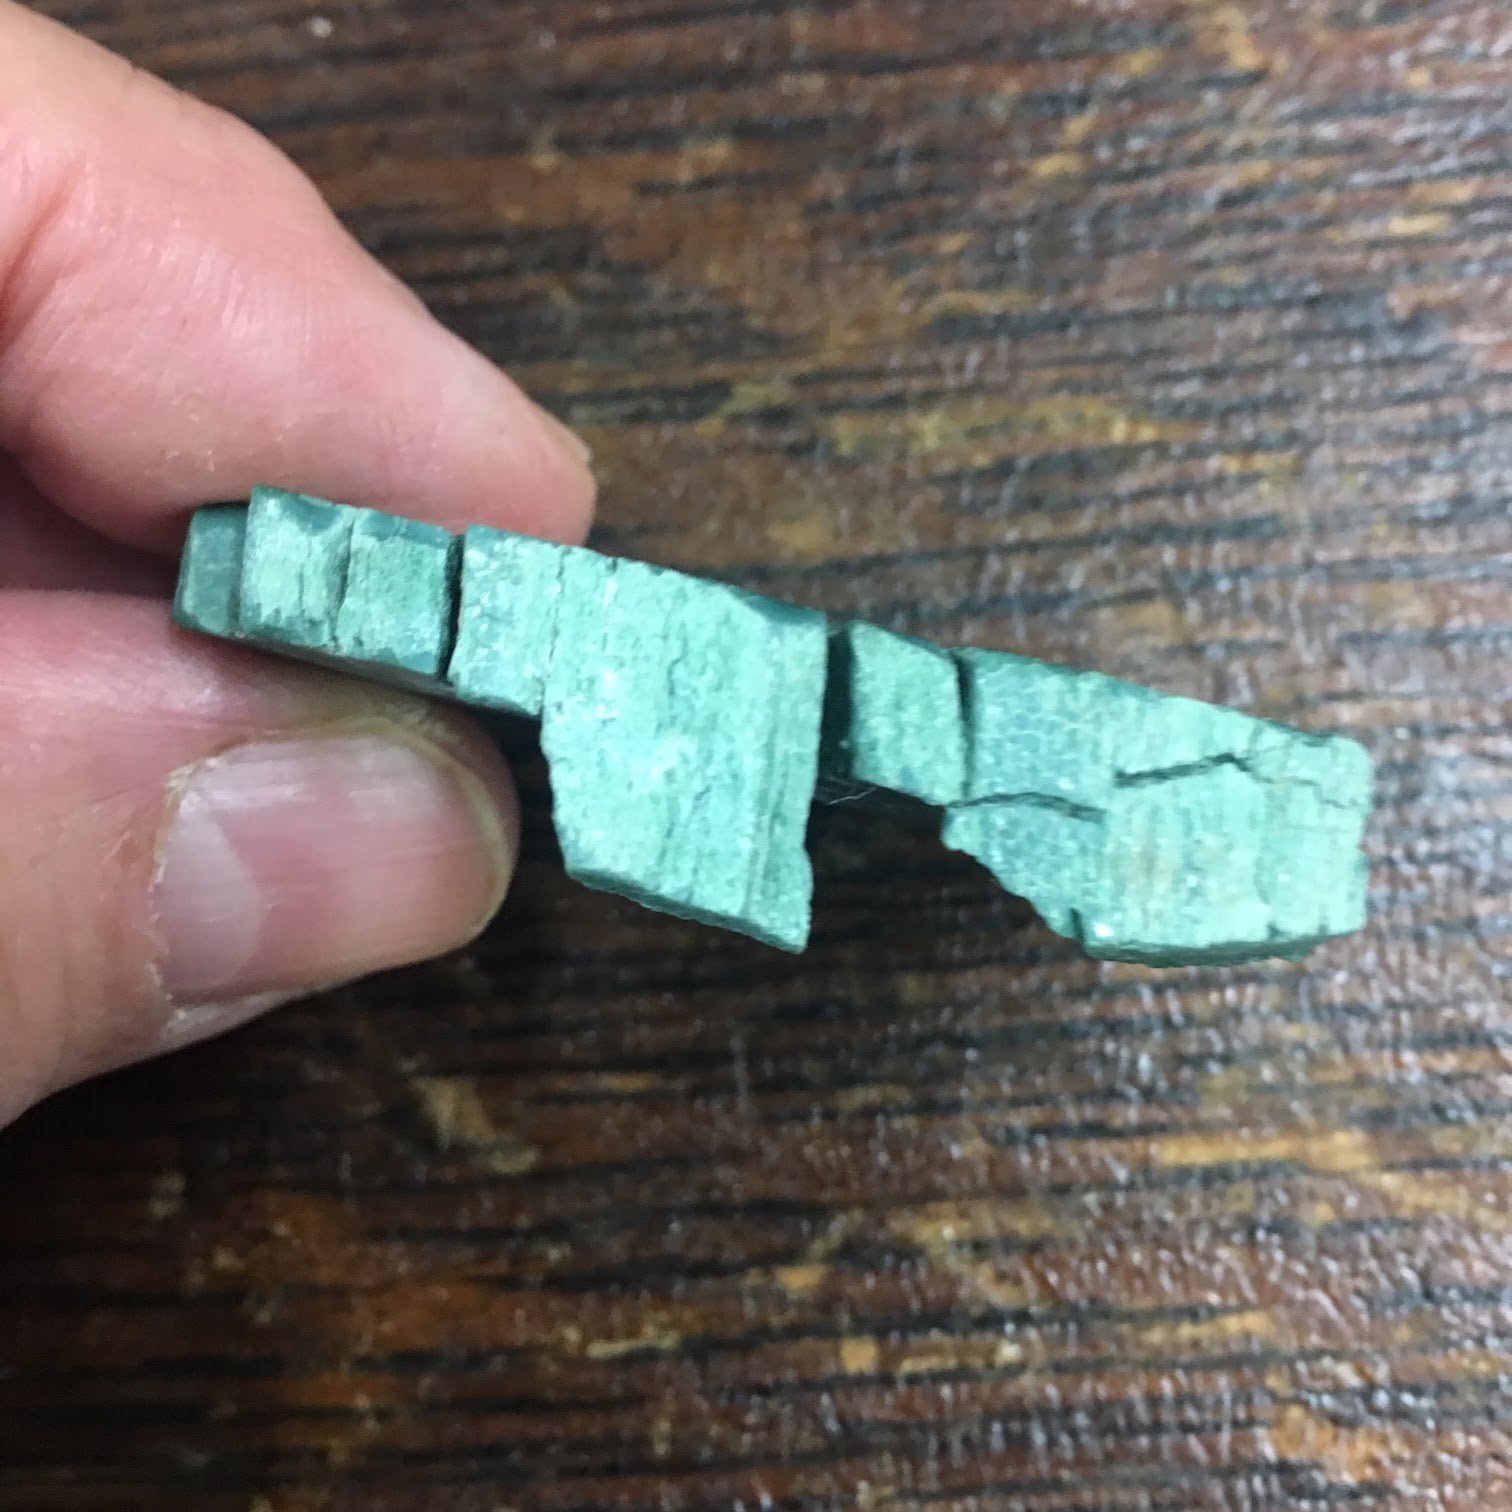 #GCPW2 Rare Mint Green Chromium Petrified Wood Limb Slice. From the Chinle formation near Winslow, AZ.